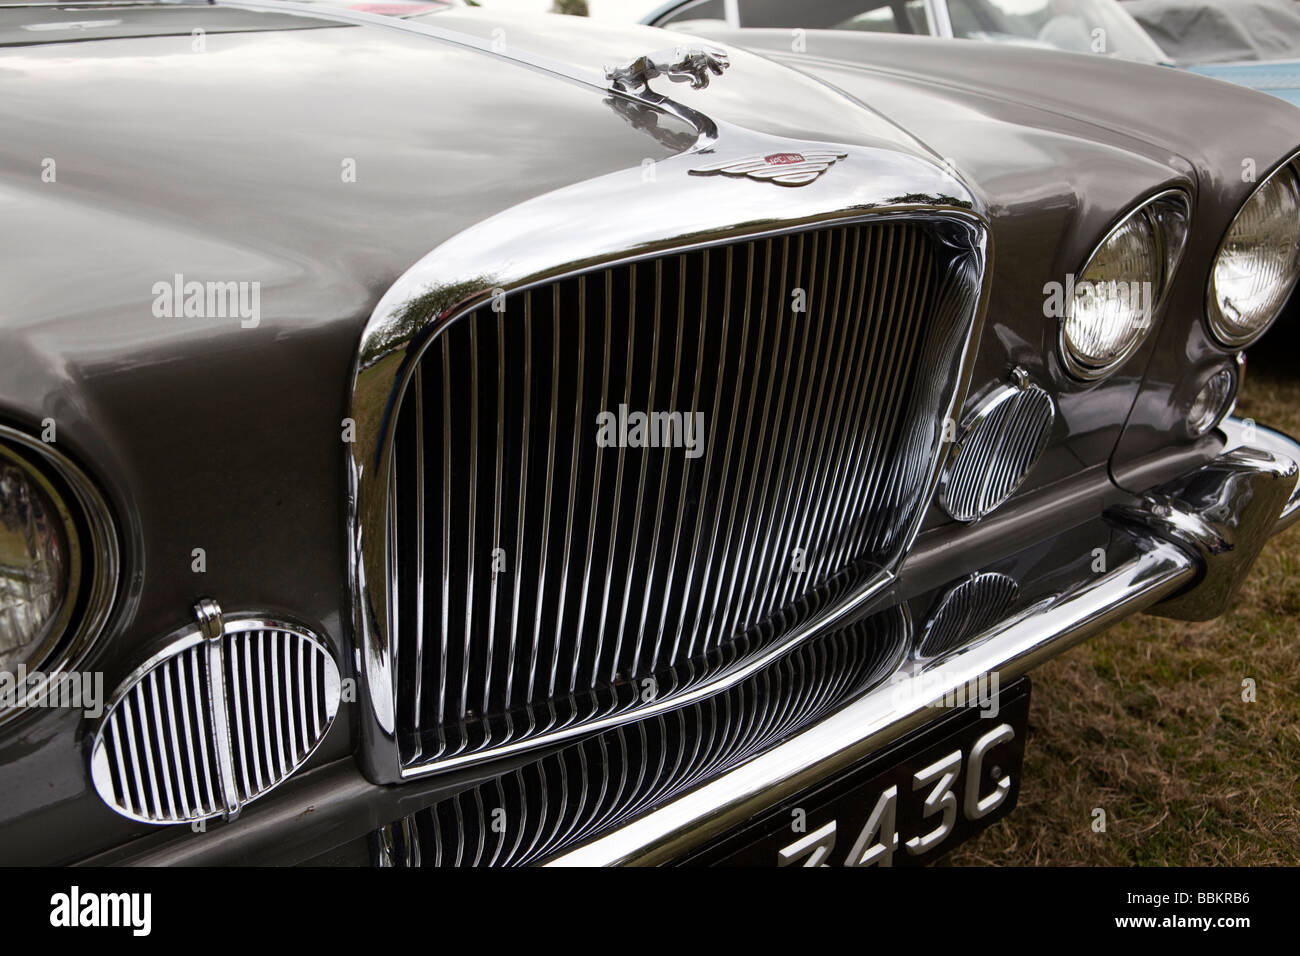 Motoring front of classic old British made 1960s Mark 10 Jaguar car Stock Photo